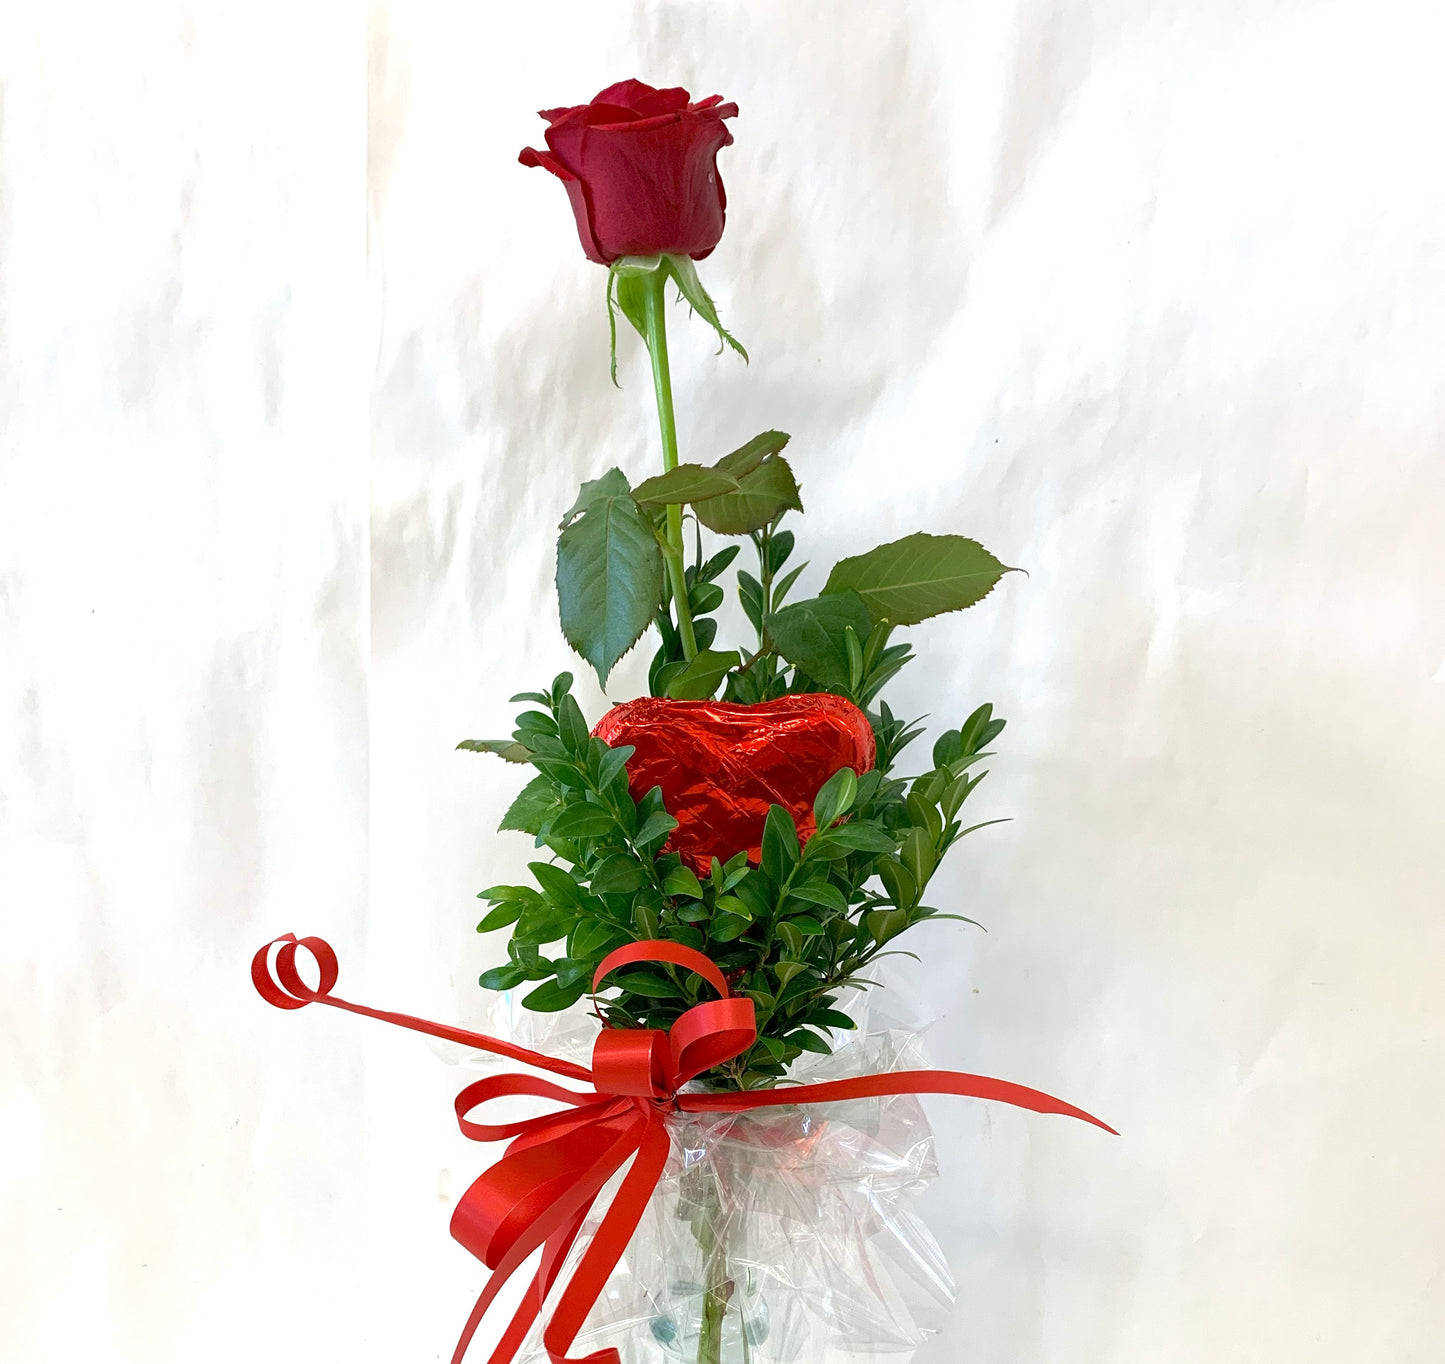 Singular Red Rose in Vase